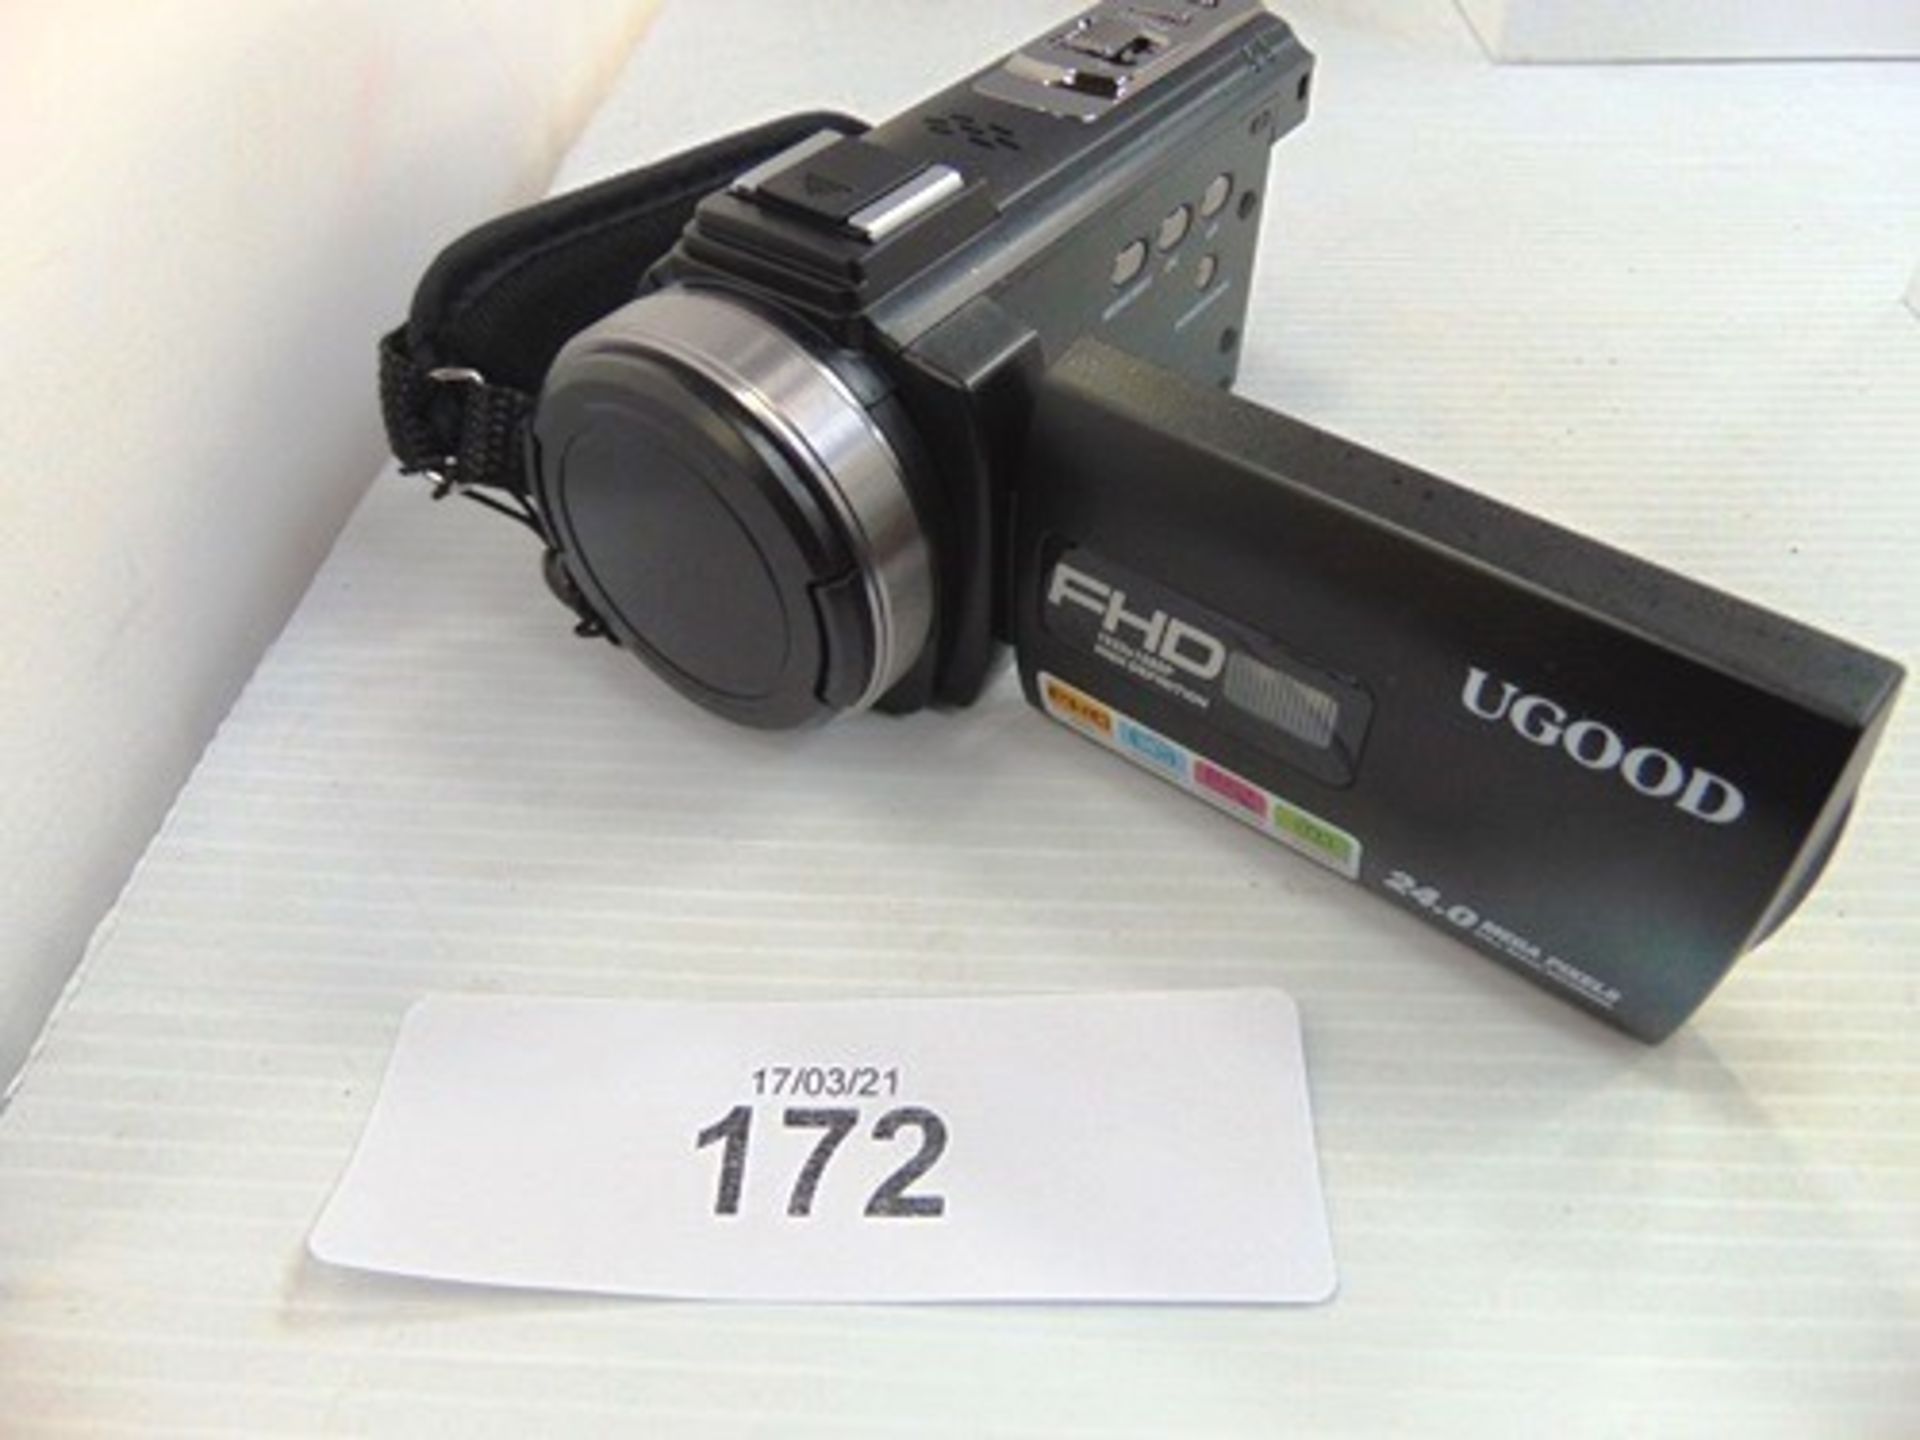 1 x UGOOD digital video camera, model HDV-2053STRM, 24 mega pixels, Full HD 1920 x 1080 - New in - Image 3 of 3